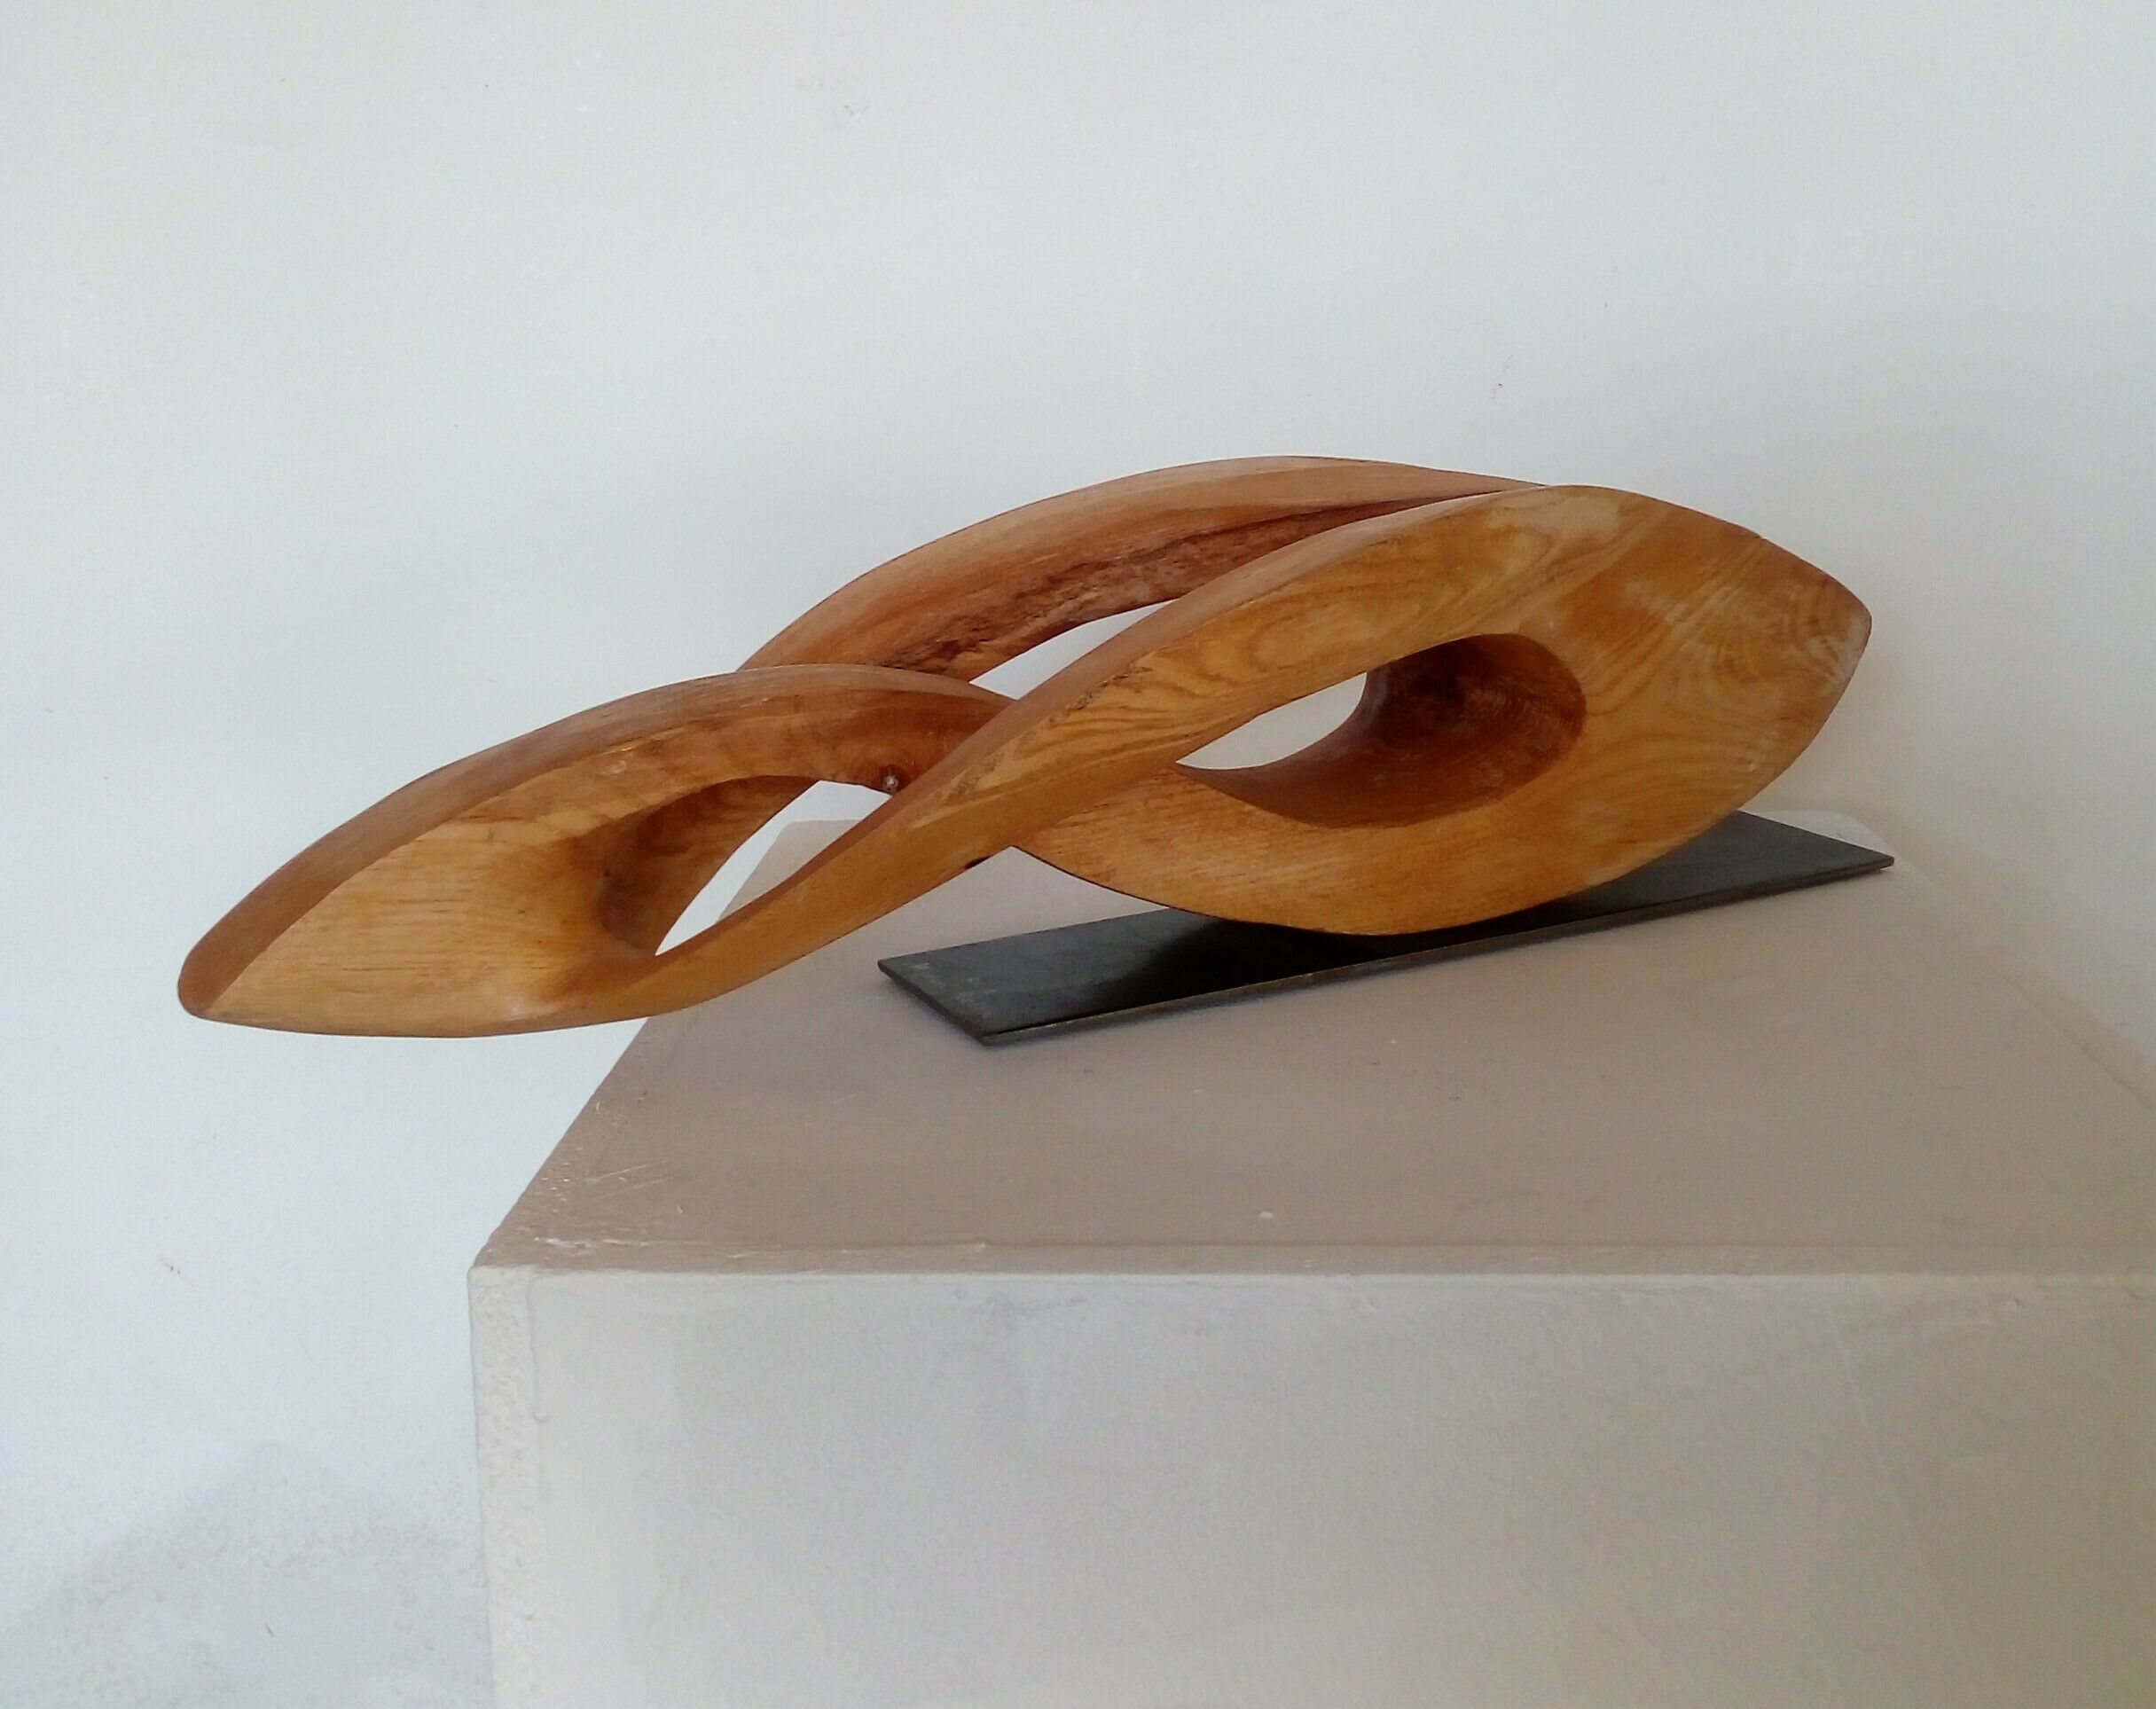 Sculpture "Hydroplane" (2010)